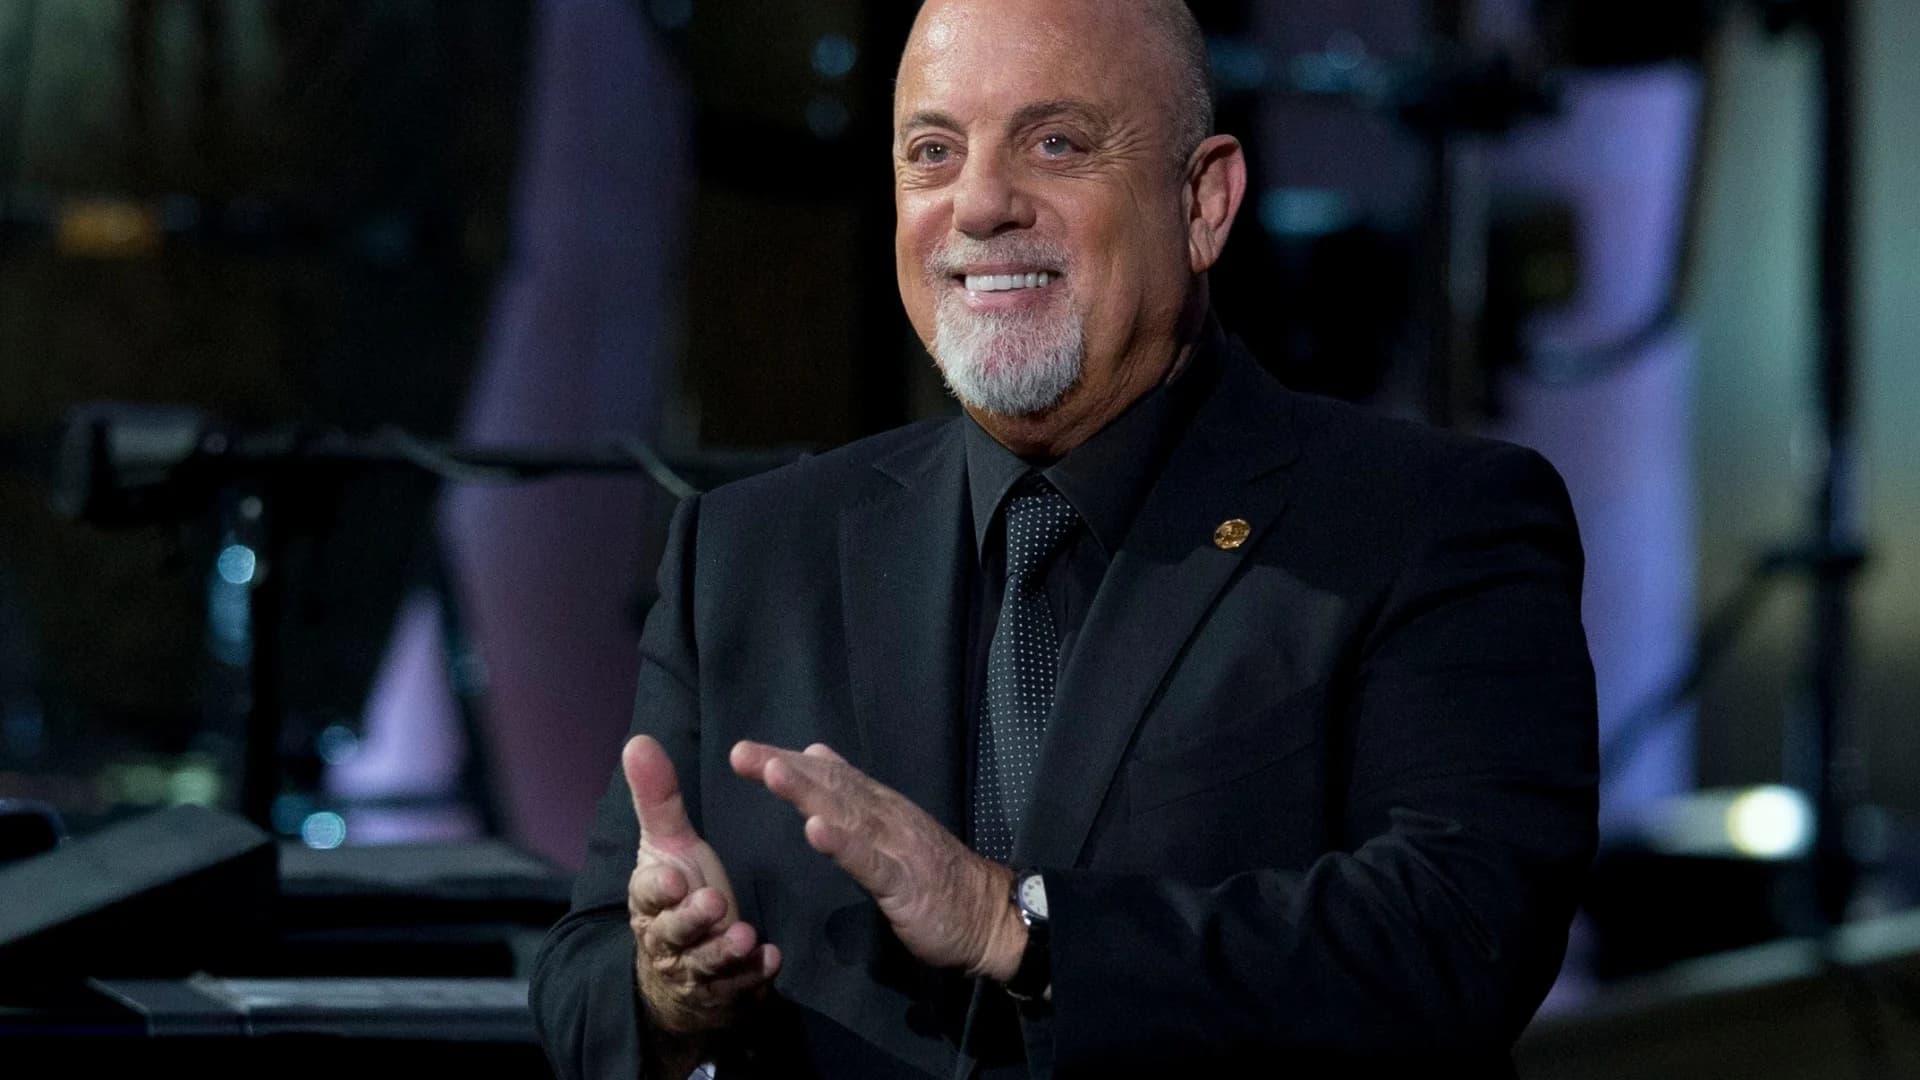 Listen to Billy Joel music, SiriusXM for free through May 15